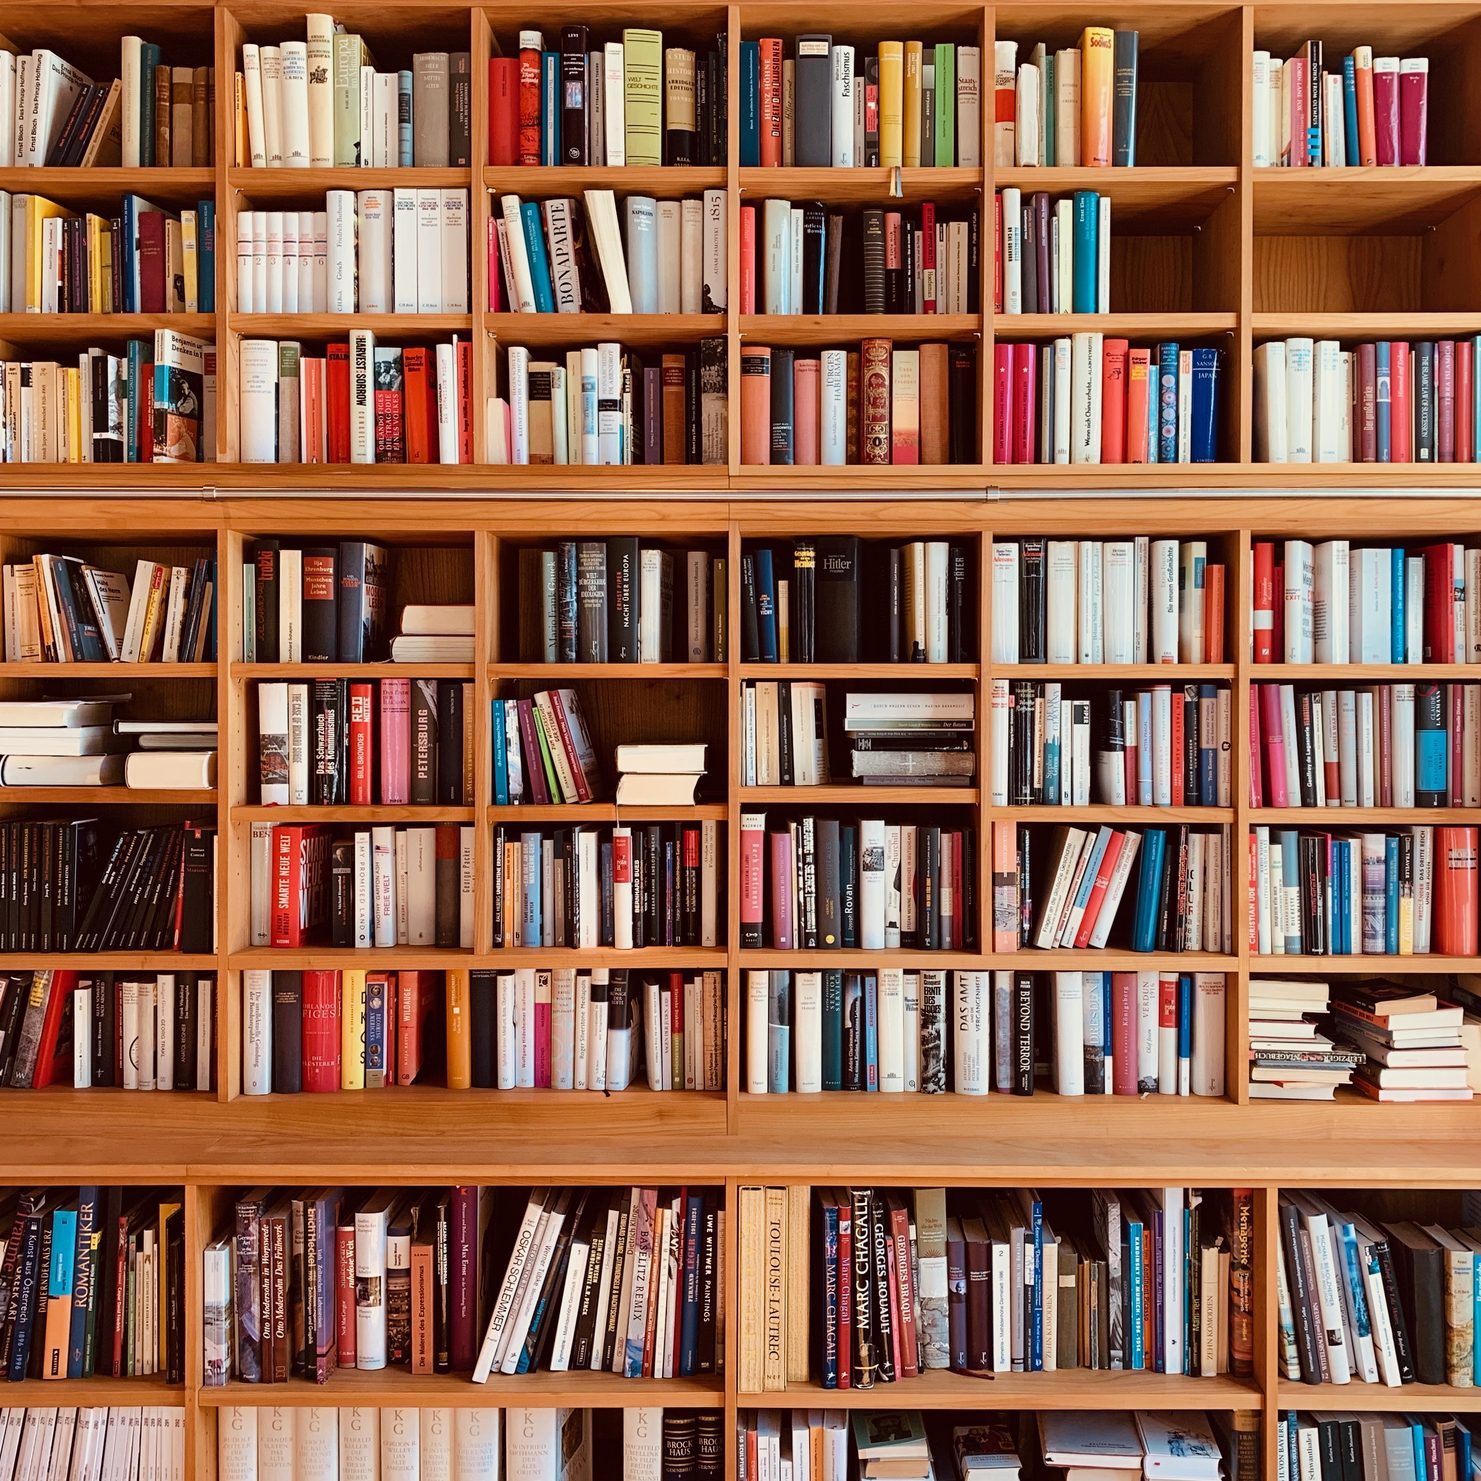 How to Organize Books on a Bookshelf